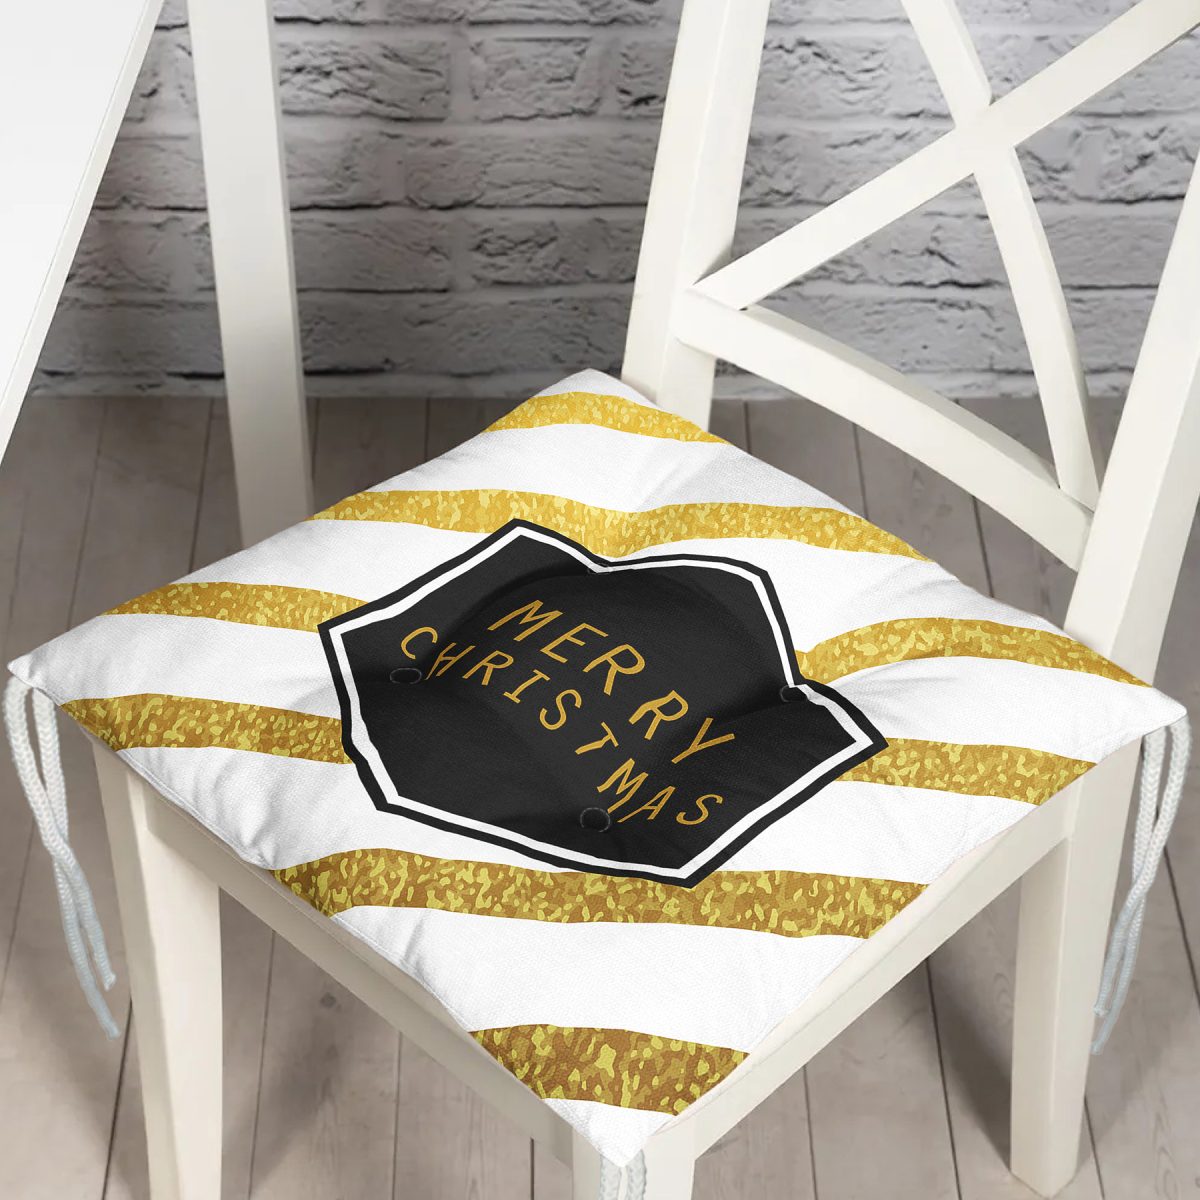 Altın Şeritli Merry Christmas Desenli Dekoratif Pofuduk Sandalye Minderi Realhomes